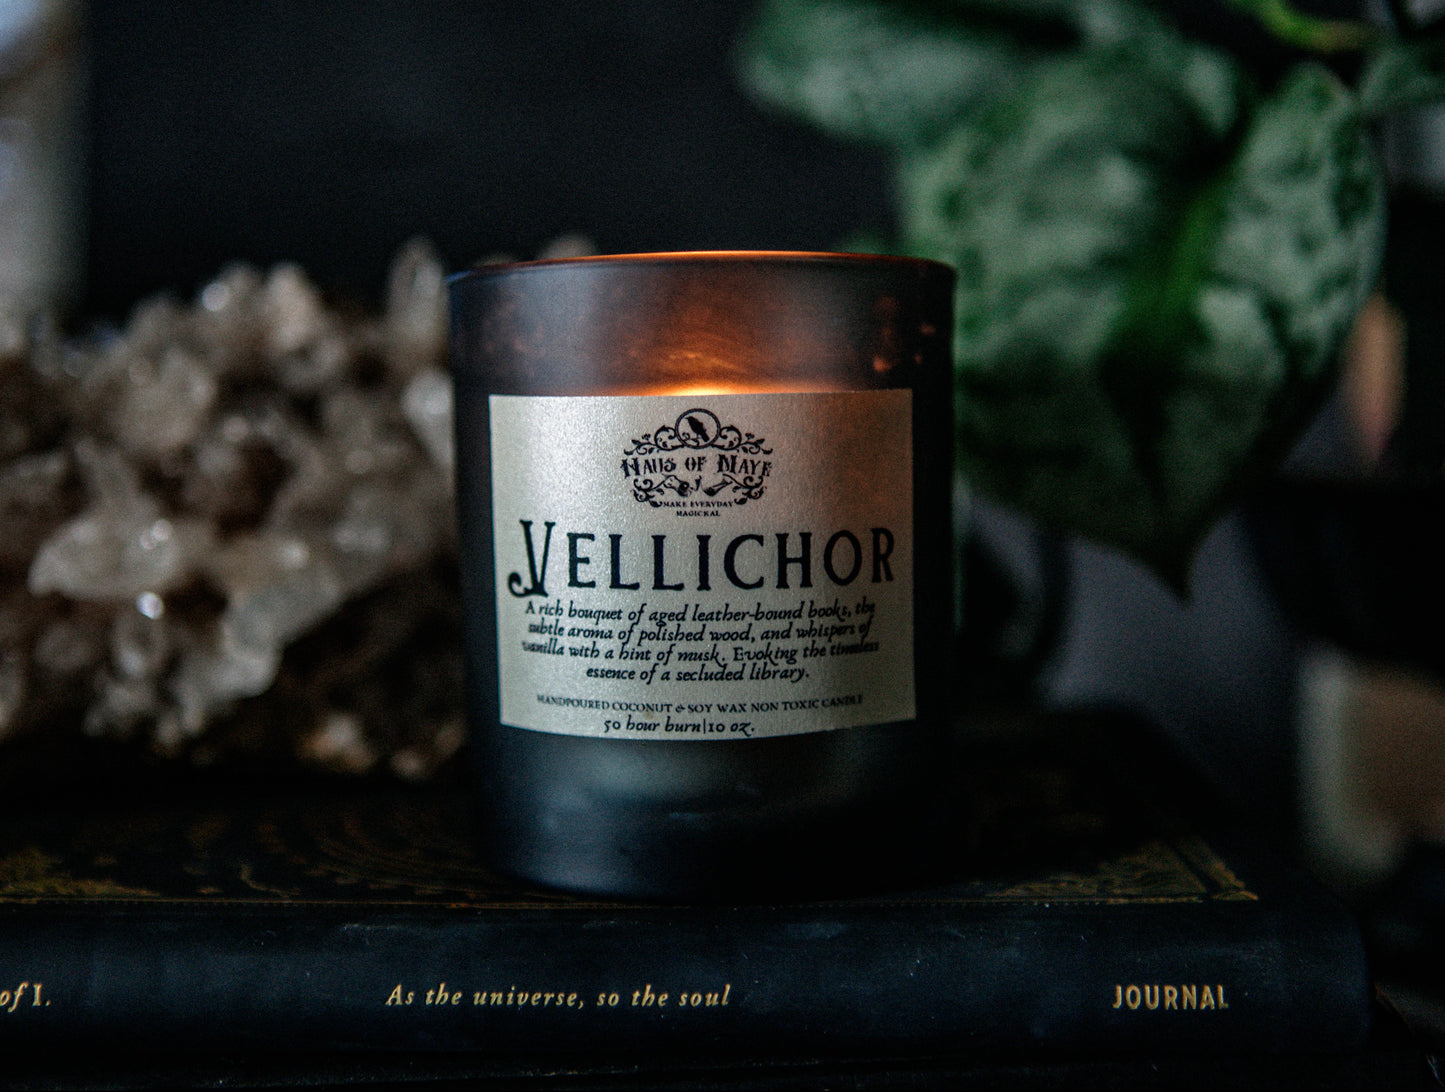 Vellichor Luxury Candle